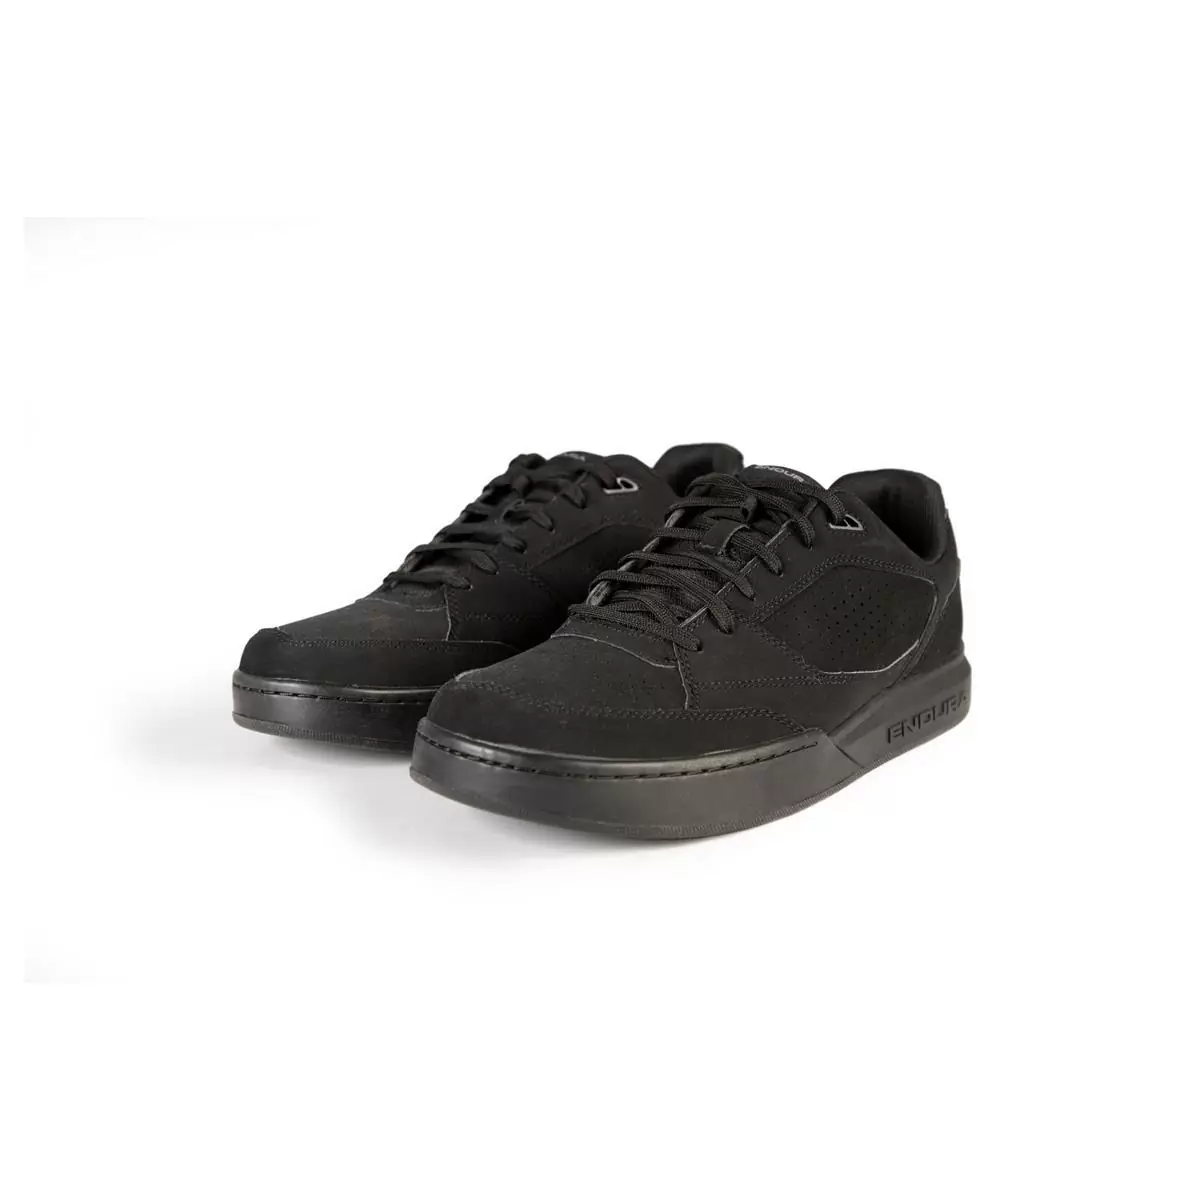 Hummvee Flat Pedal Shoes Black Size 45,5 - image